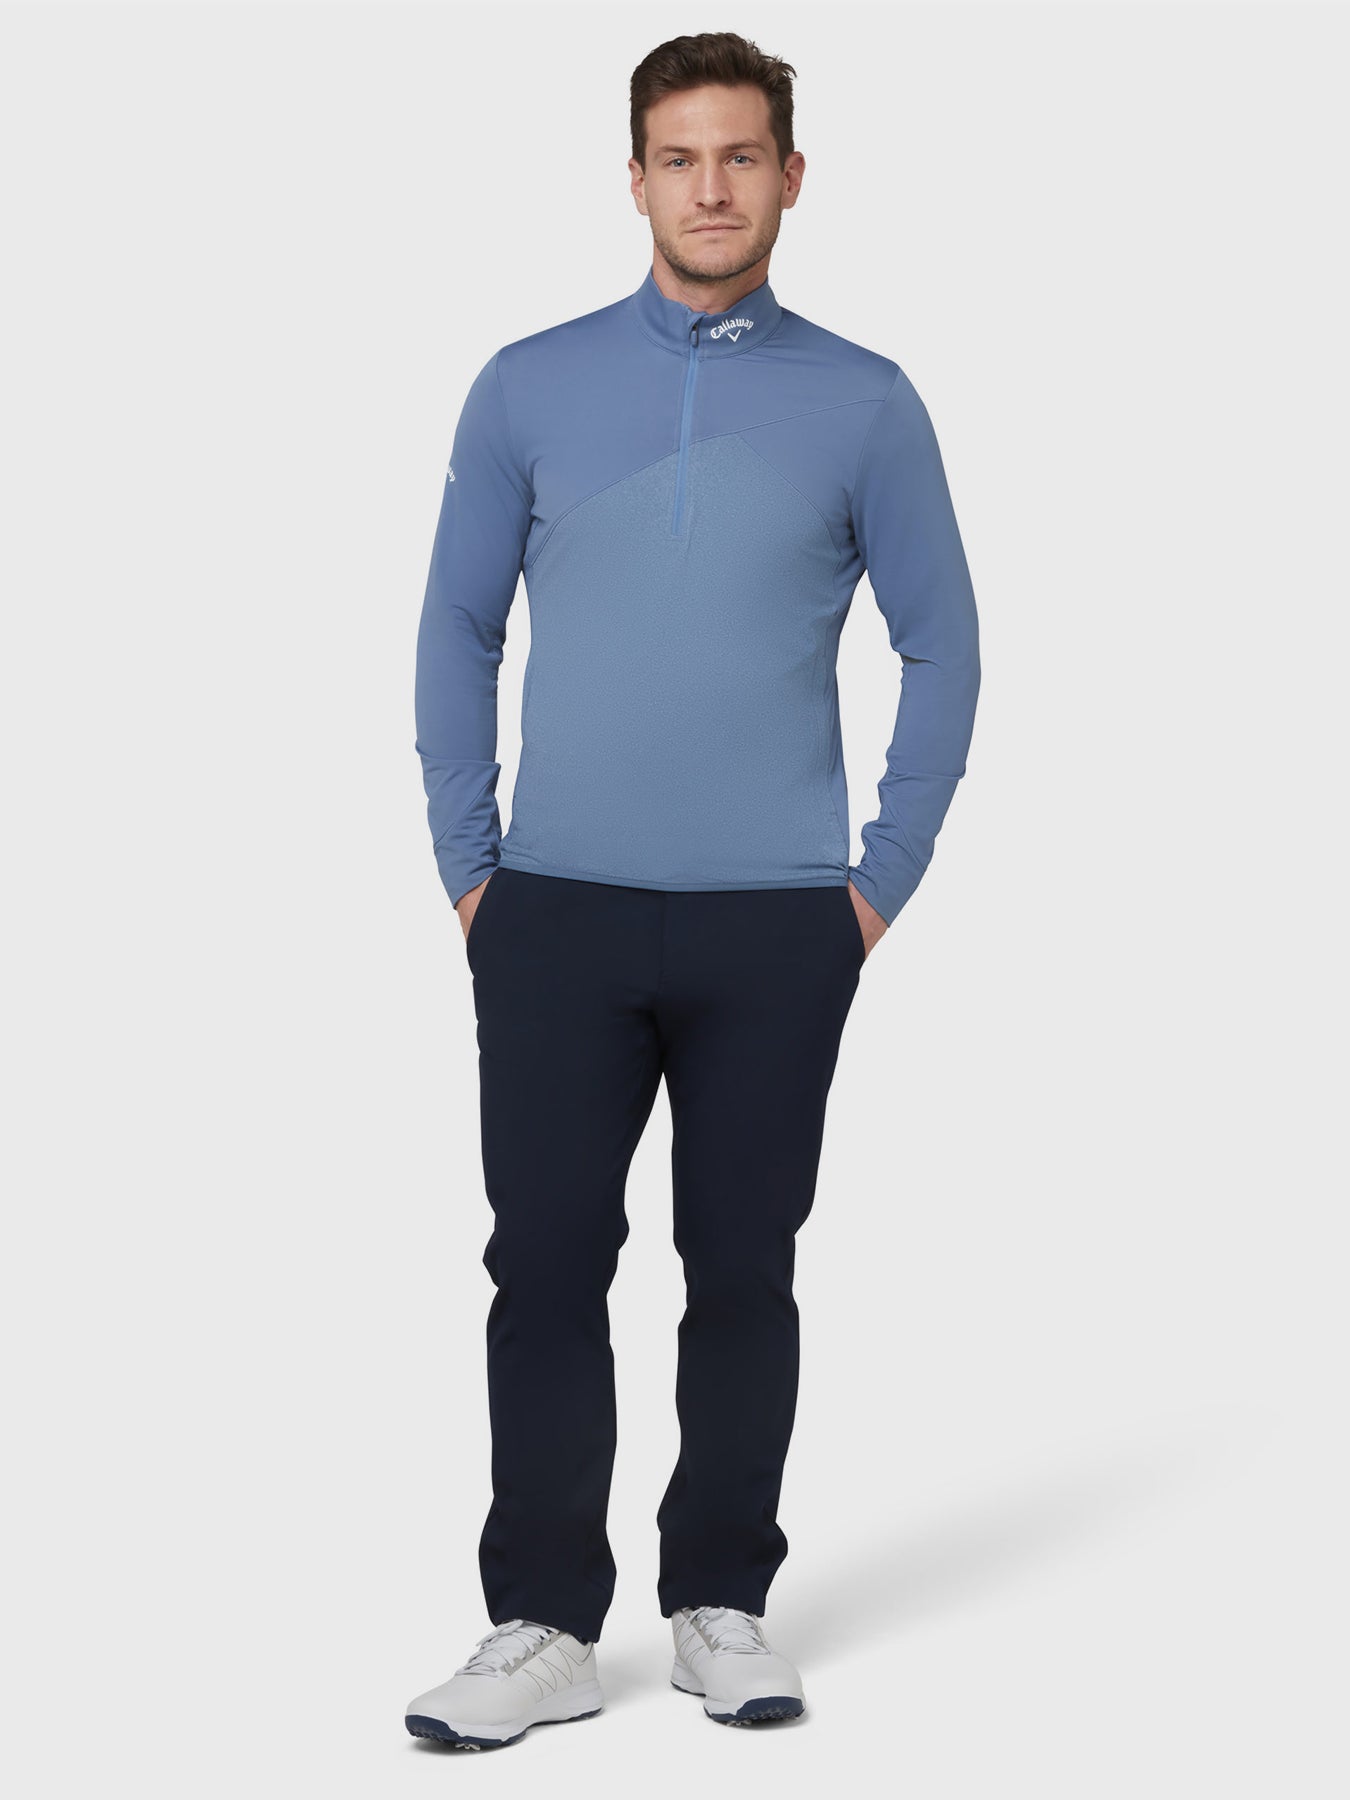 View Aquapel Ultra Light Quarter Zip Sweatshirt In Blue Horizon Blue Horizon M information